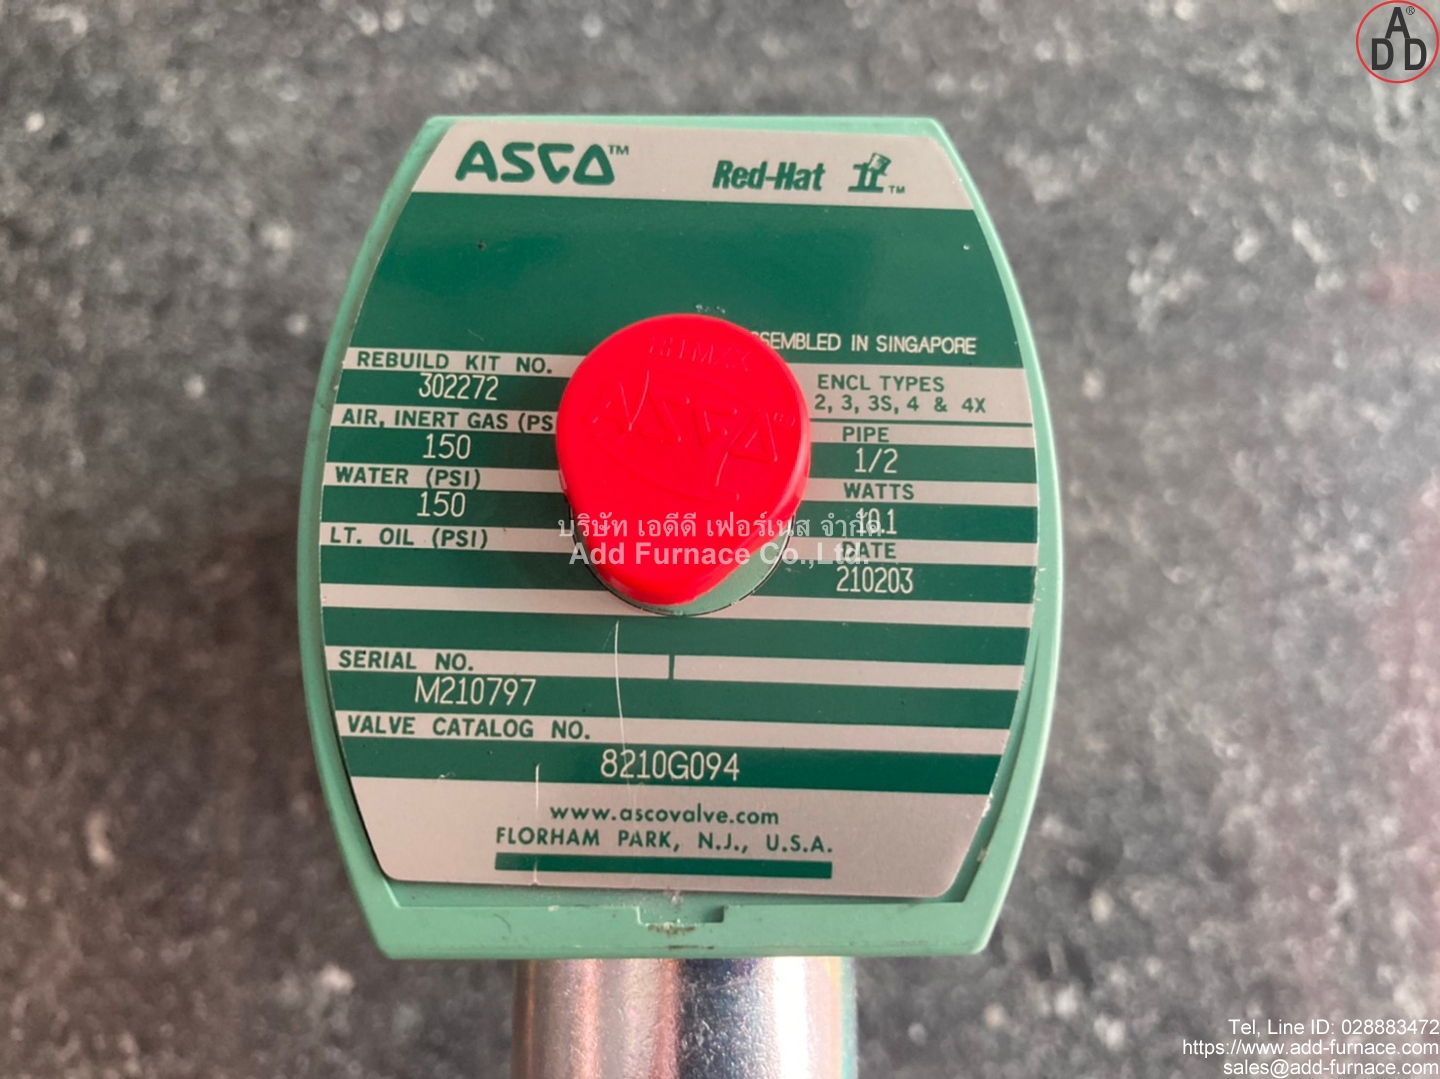 Asco Red Hat Rebuild Kit No 302272 (9)